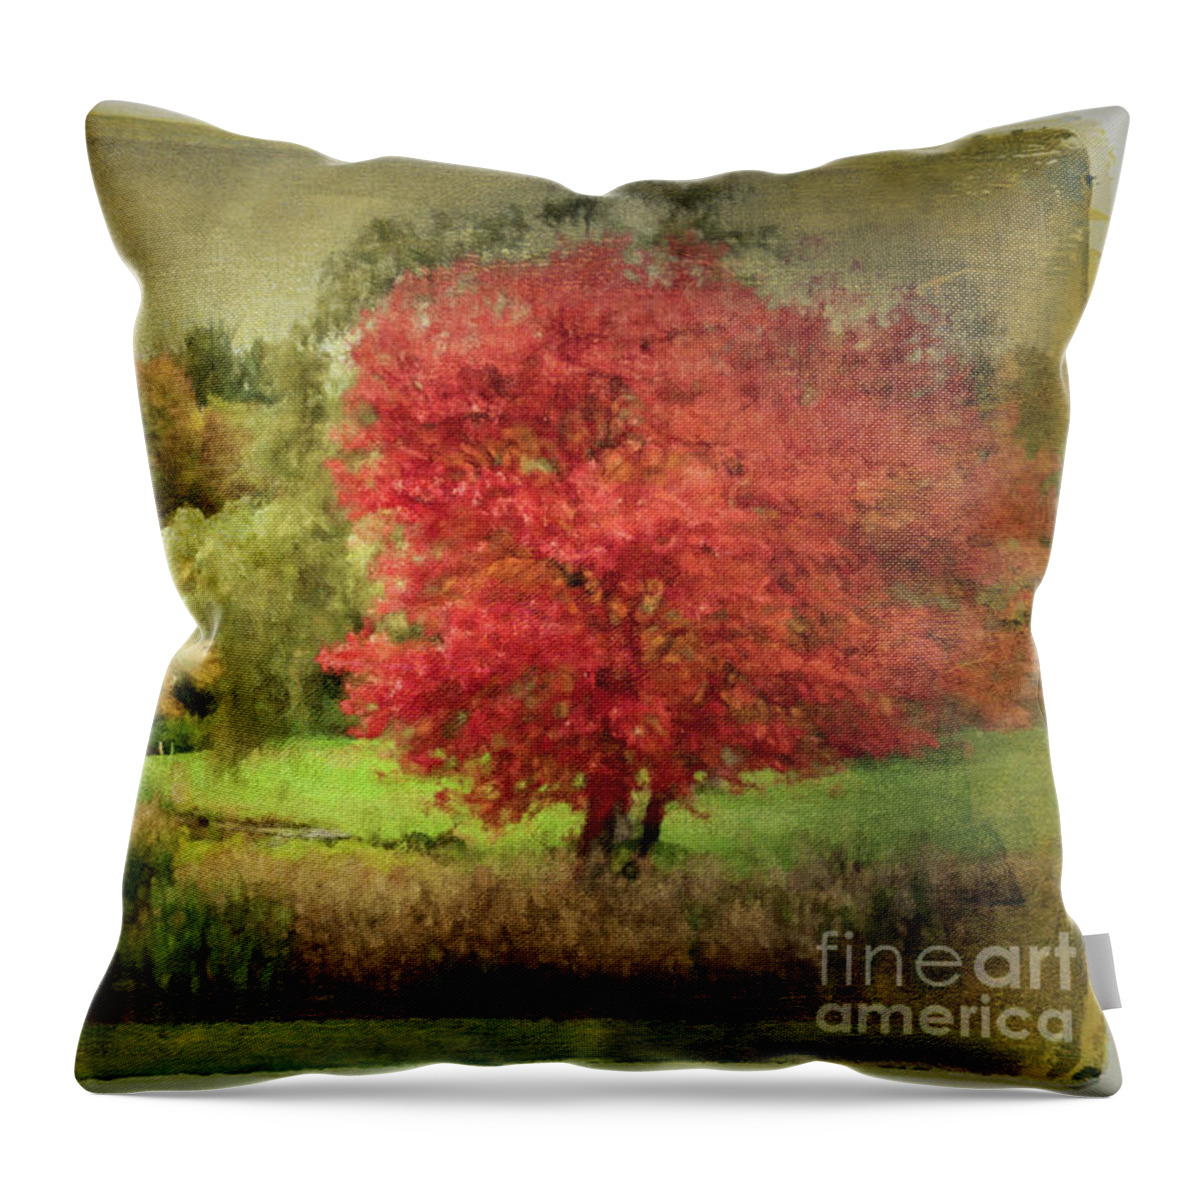 Fall Foliage Throw Pillow featuring the photograph Antique Autumn by Anita Pollak